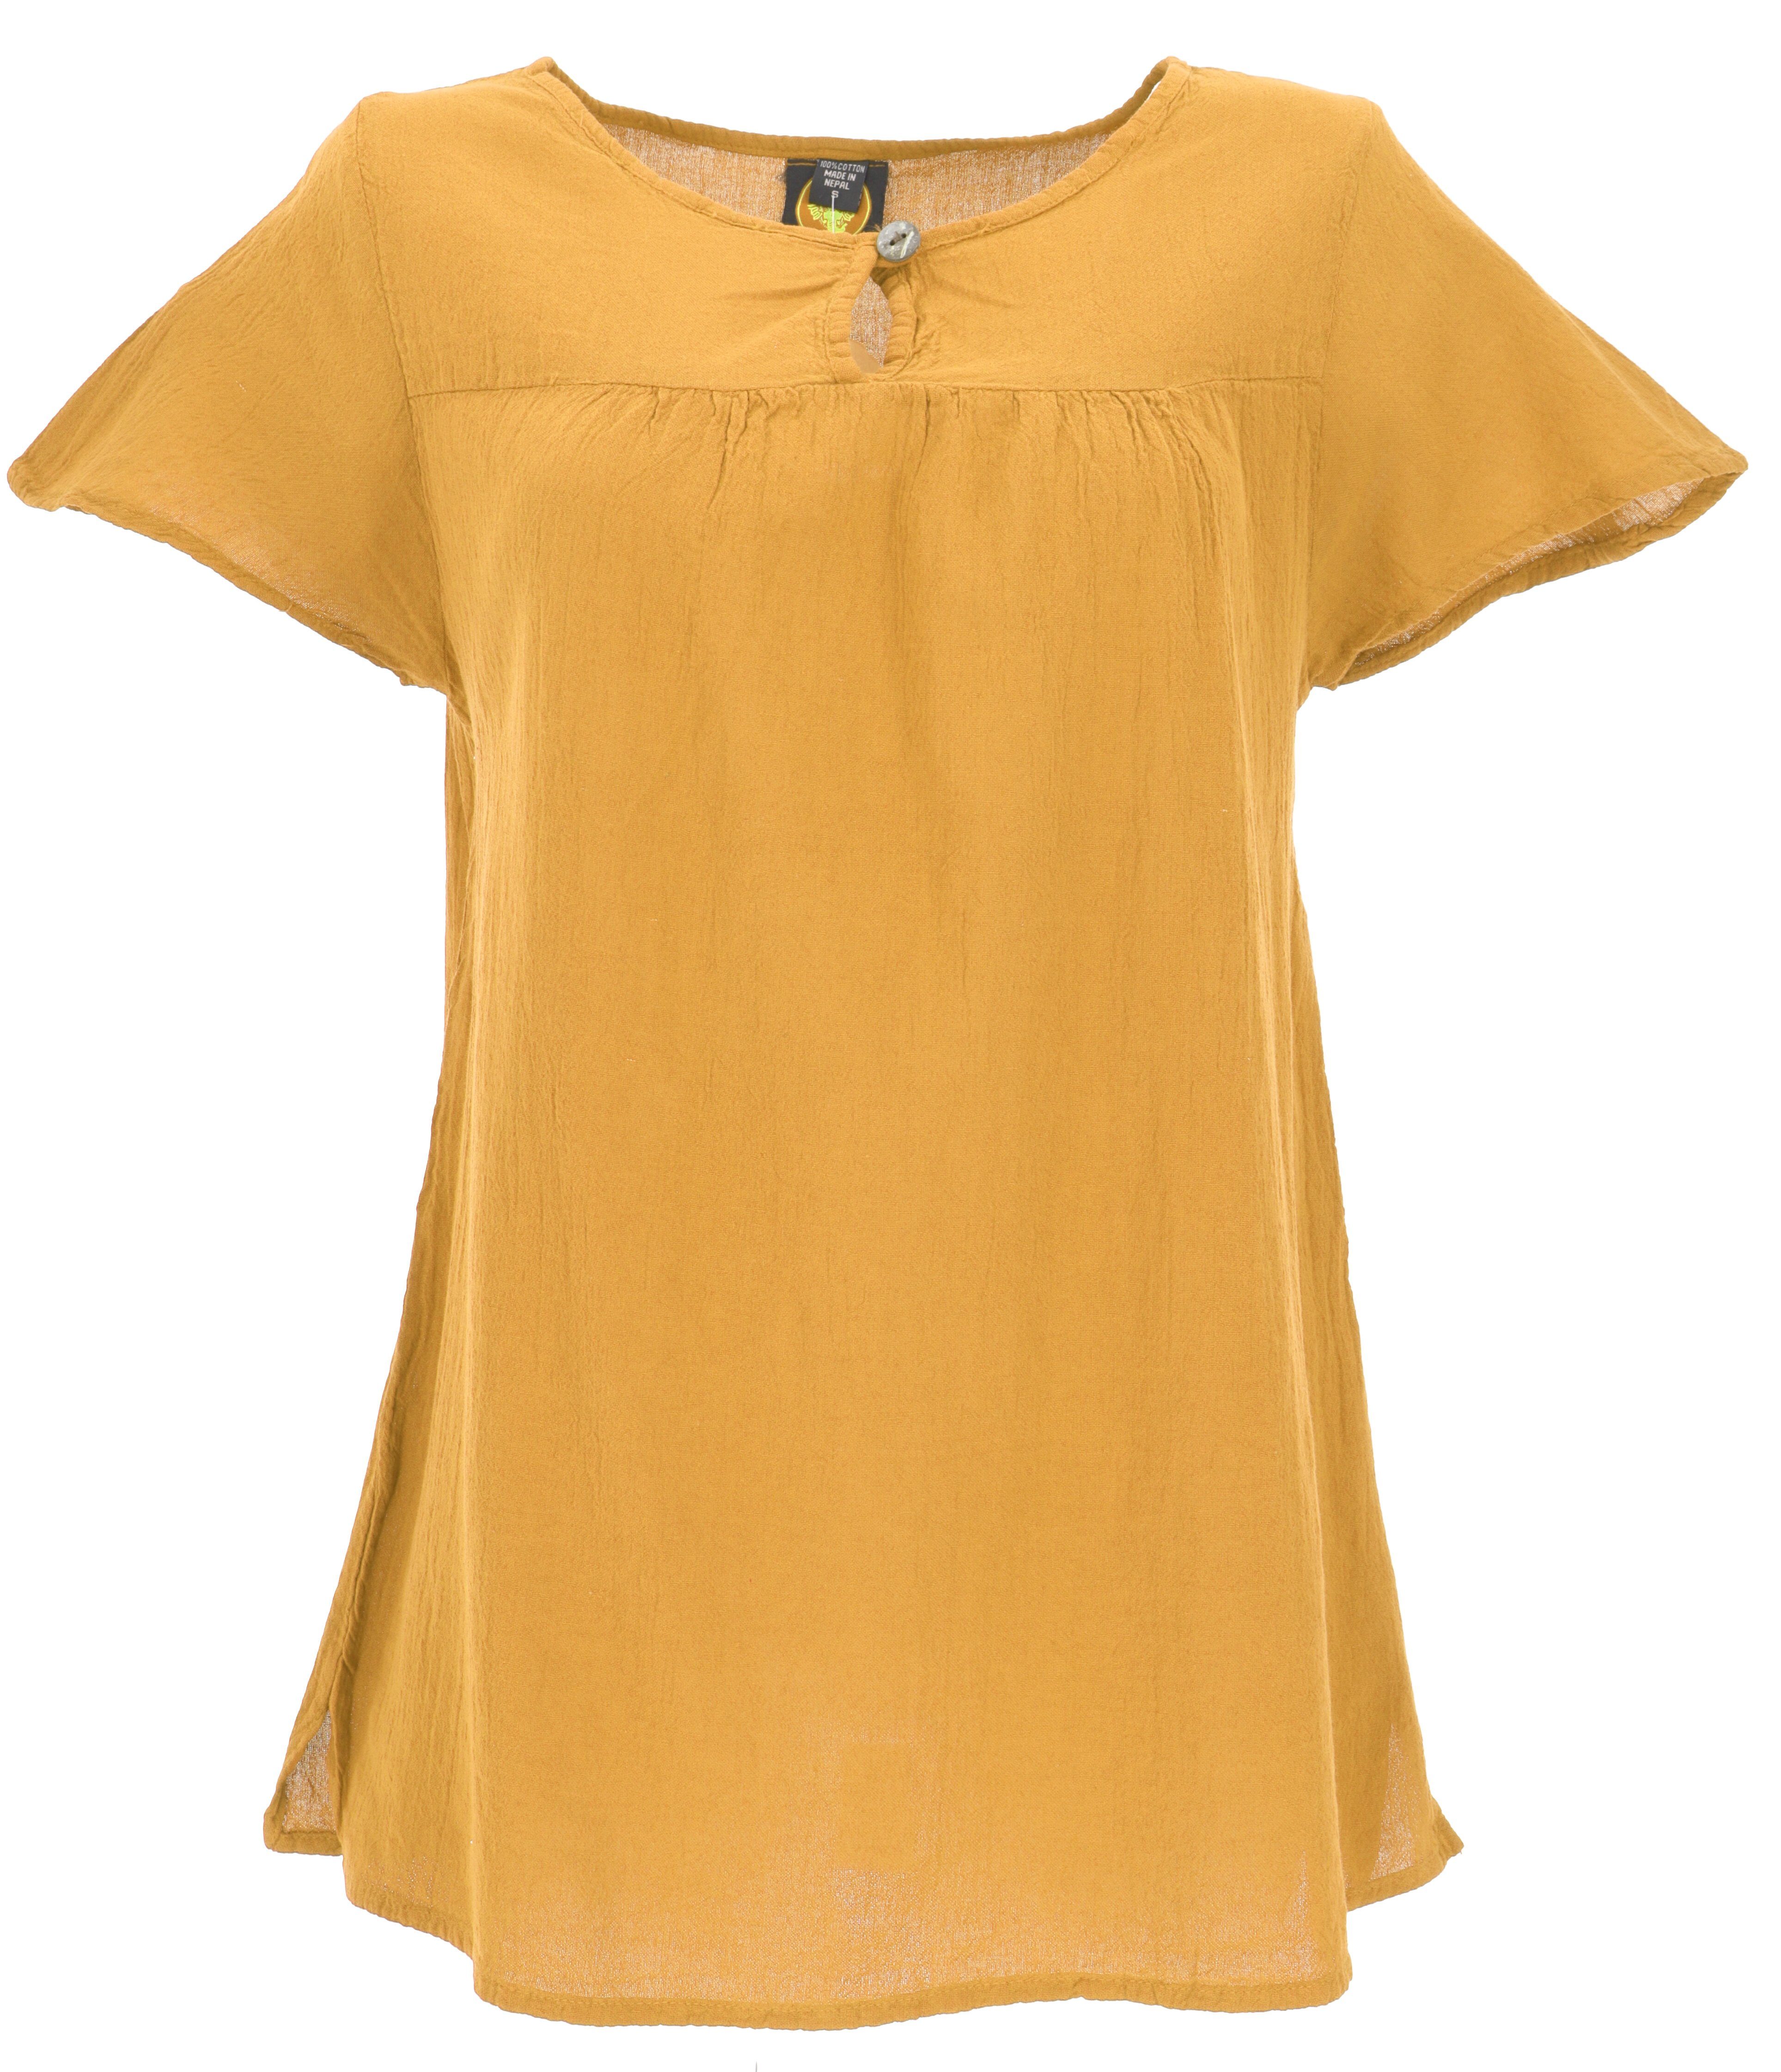 Guru-Shop Longbluse Boho Bluse, Blusenshirt, Sommerbluse - mustard alternative Bekleidung